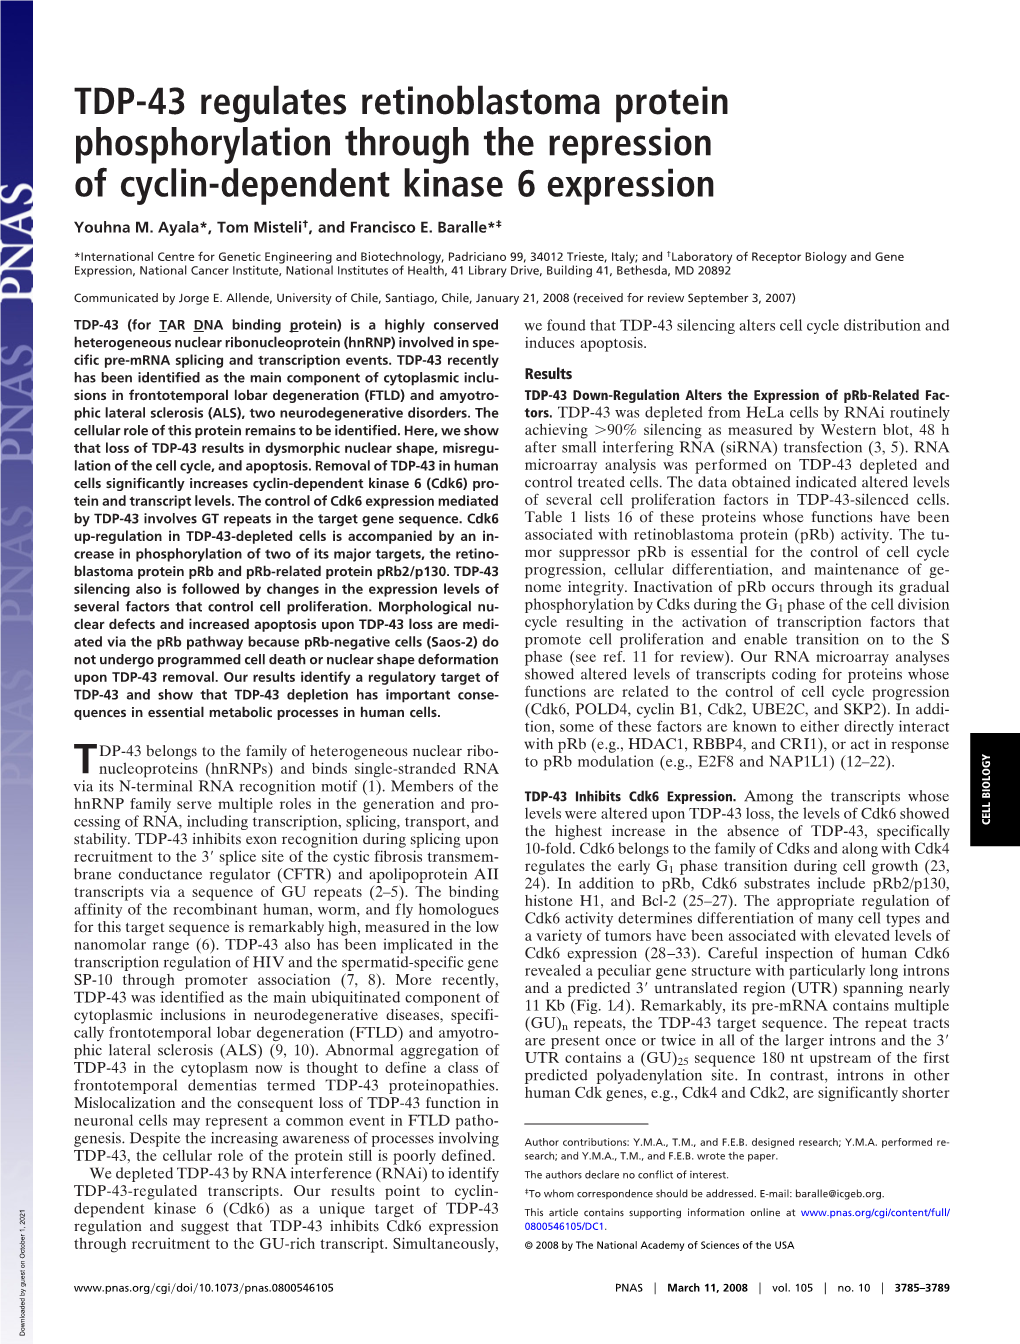 TDP-43 Regulates Retinoblastoma Protein Phosphorylation Through the Repression of Cyclin-Dependent Kinase 6 Expression